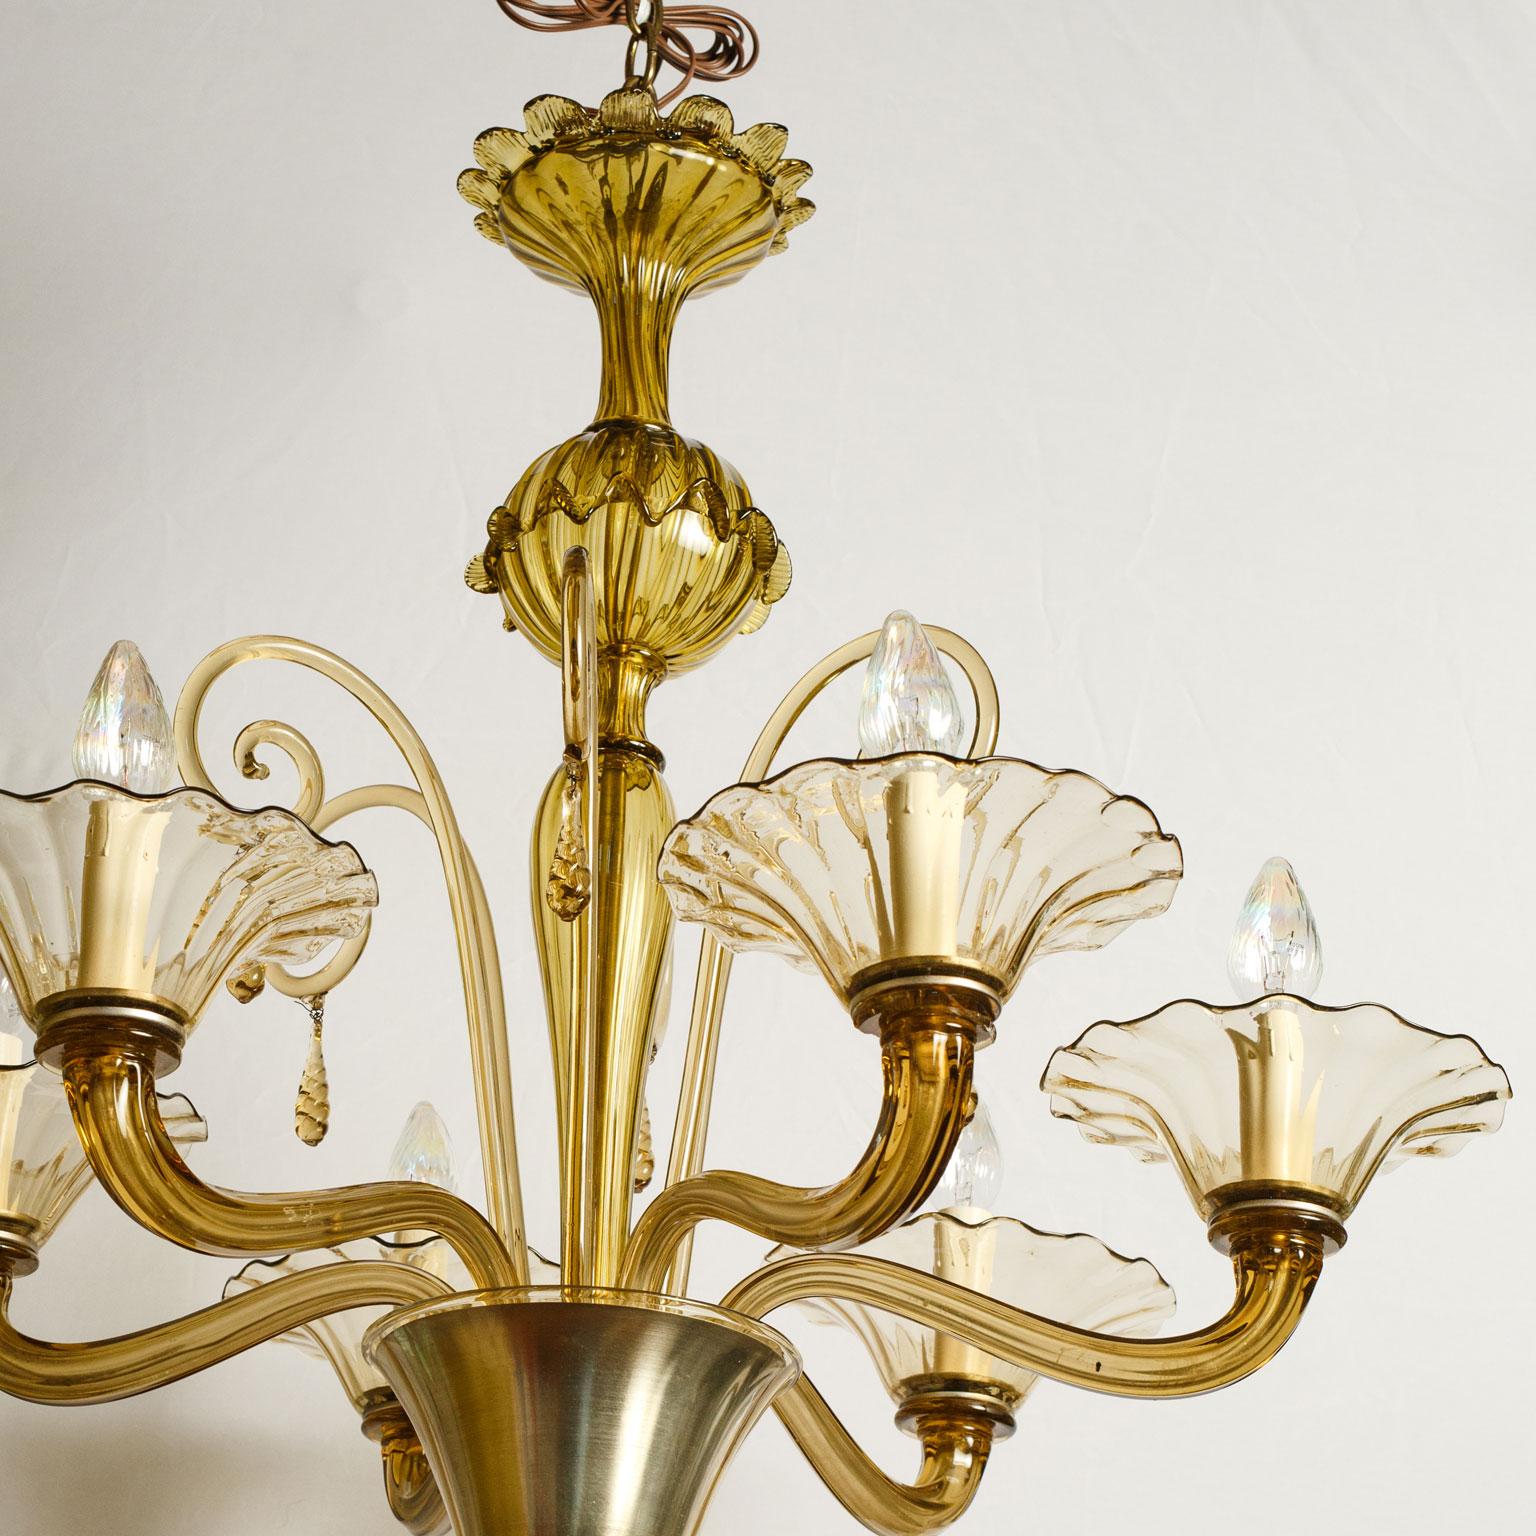 Brass Large Hand-Blown Glass Italian Venetian Chandelier in Classic Murano Style